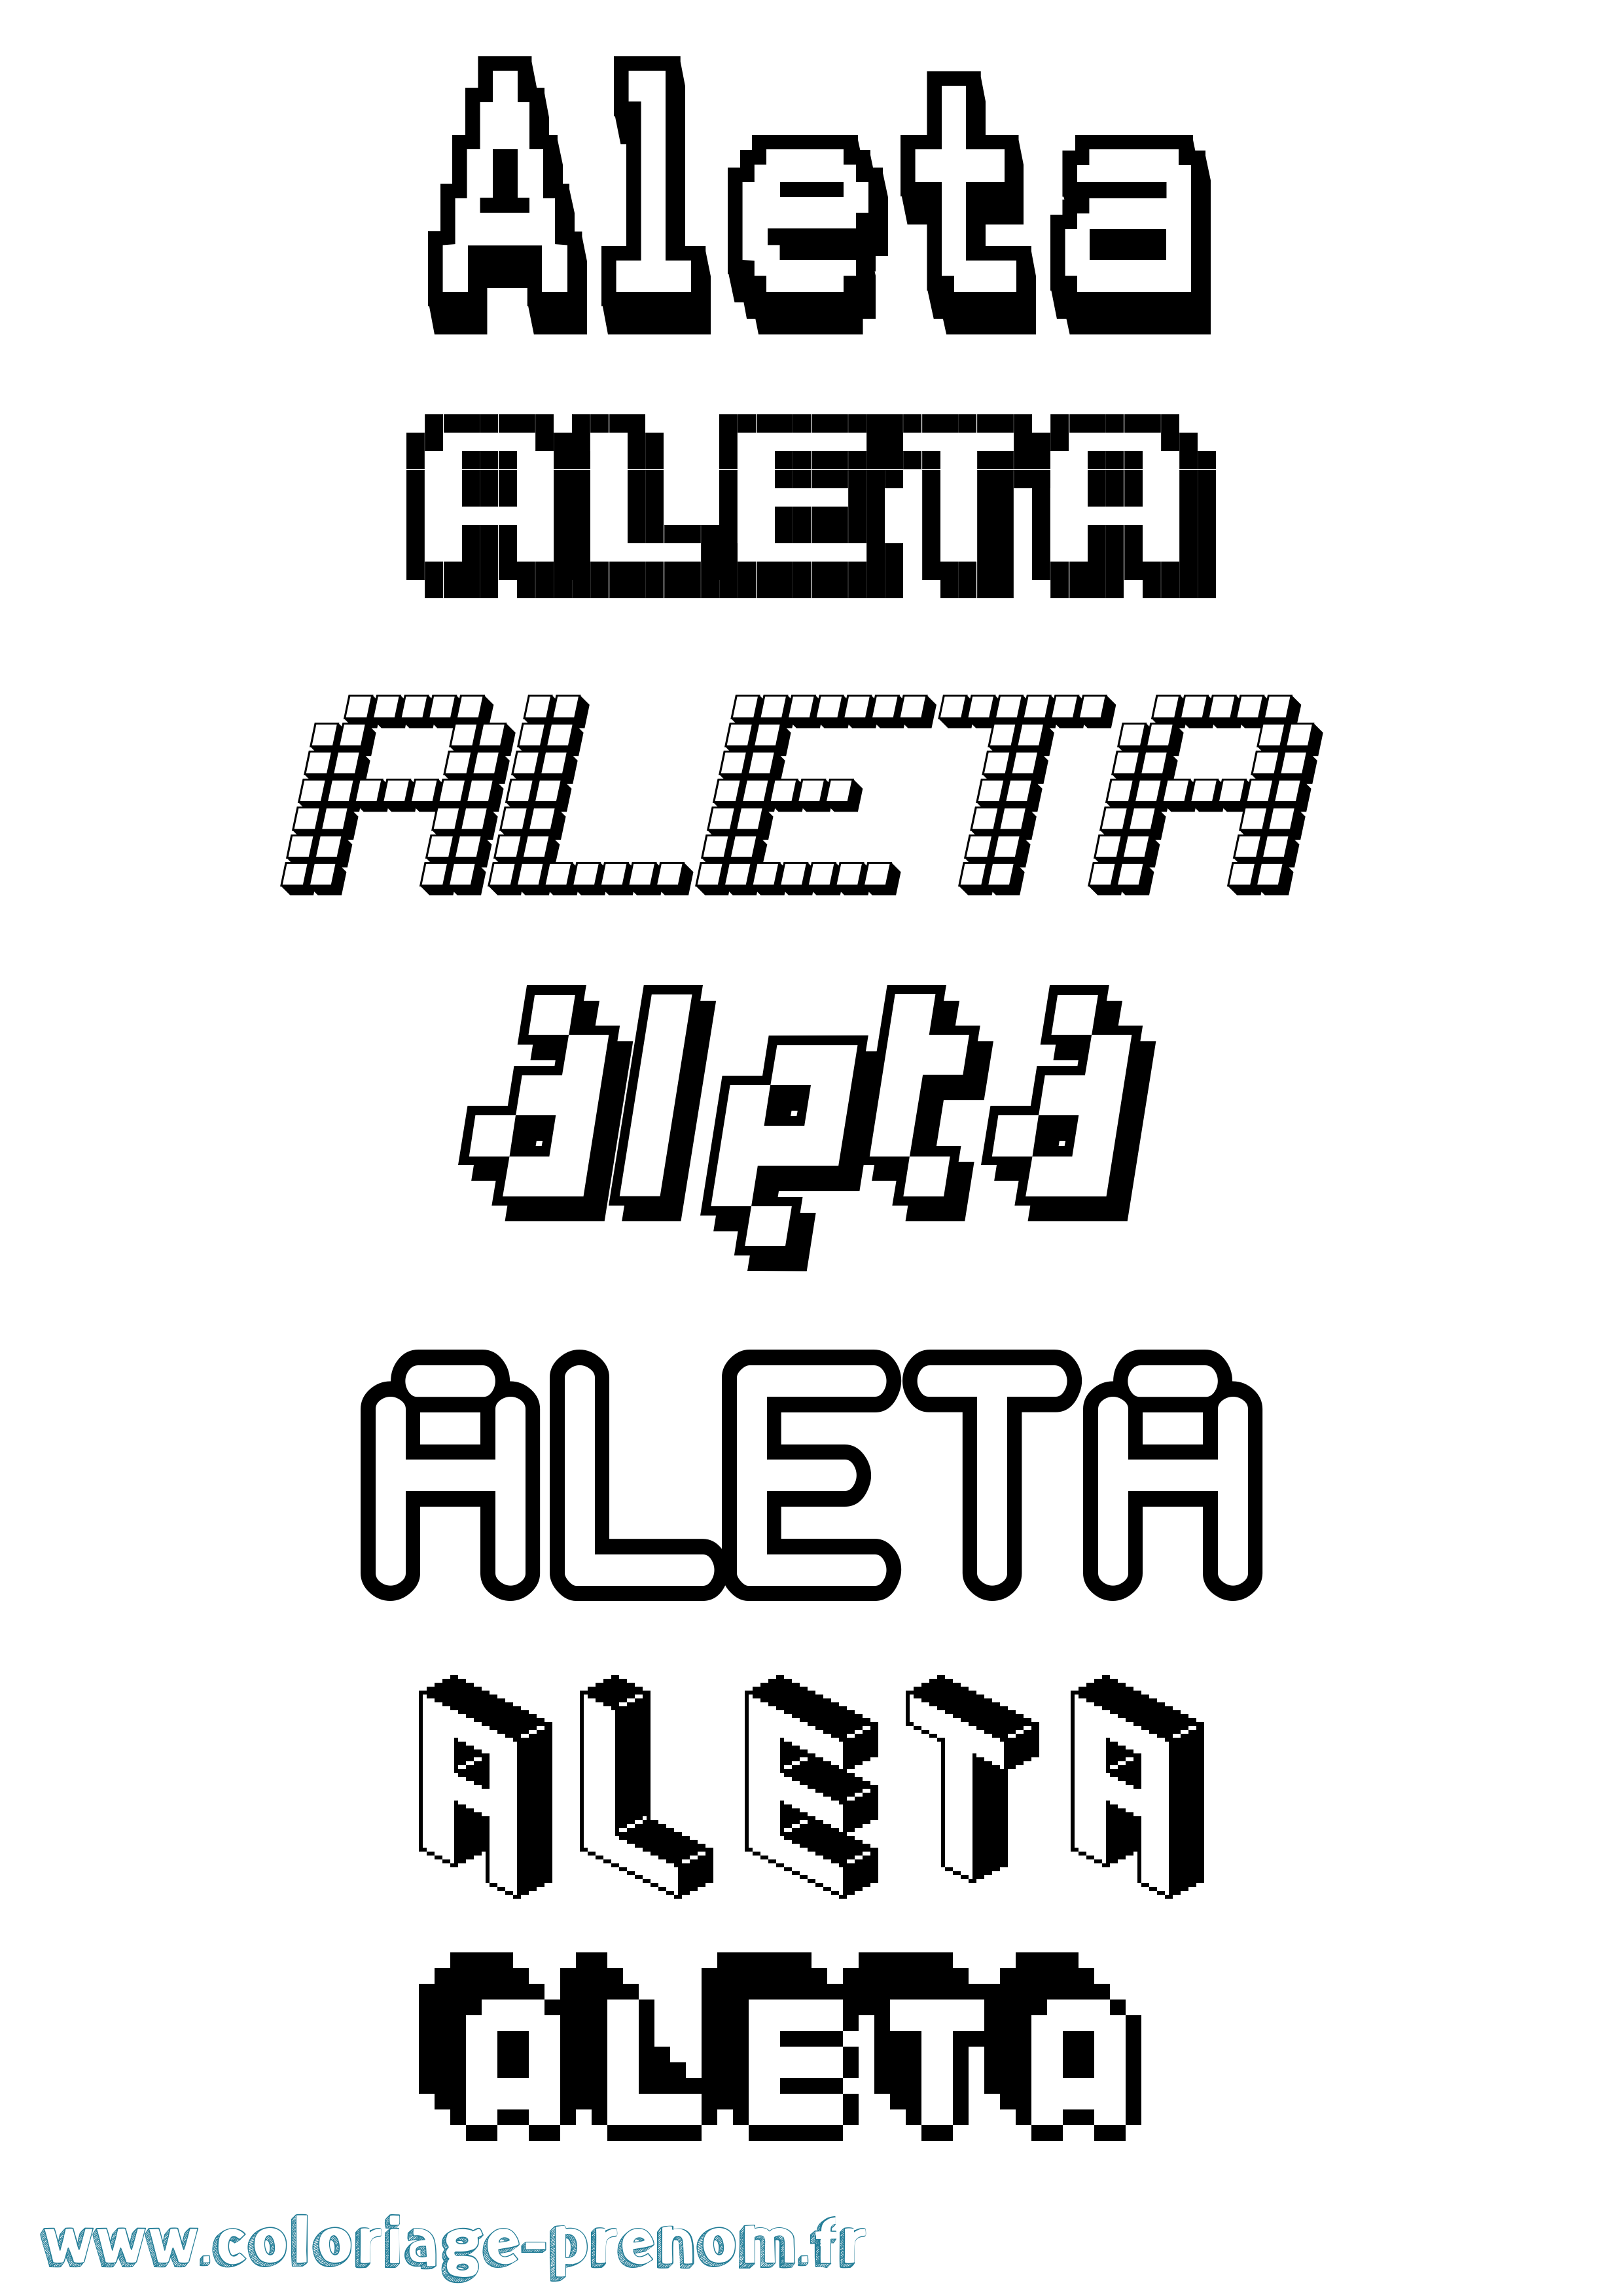 Coloriage prénom Aleta Pixel